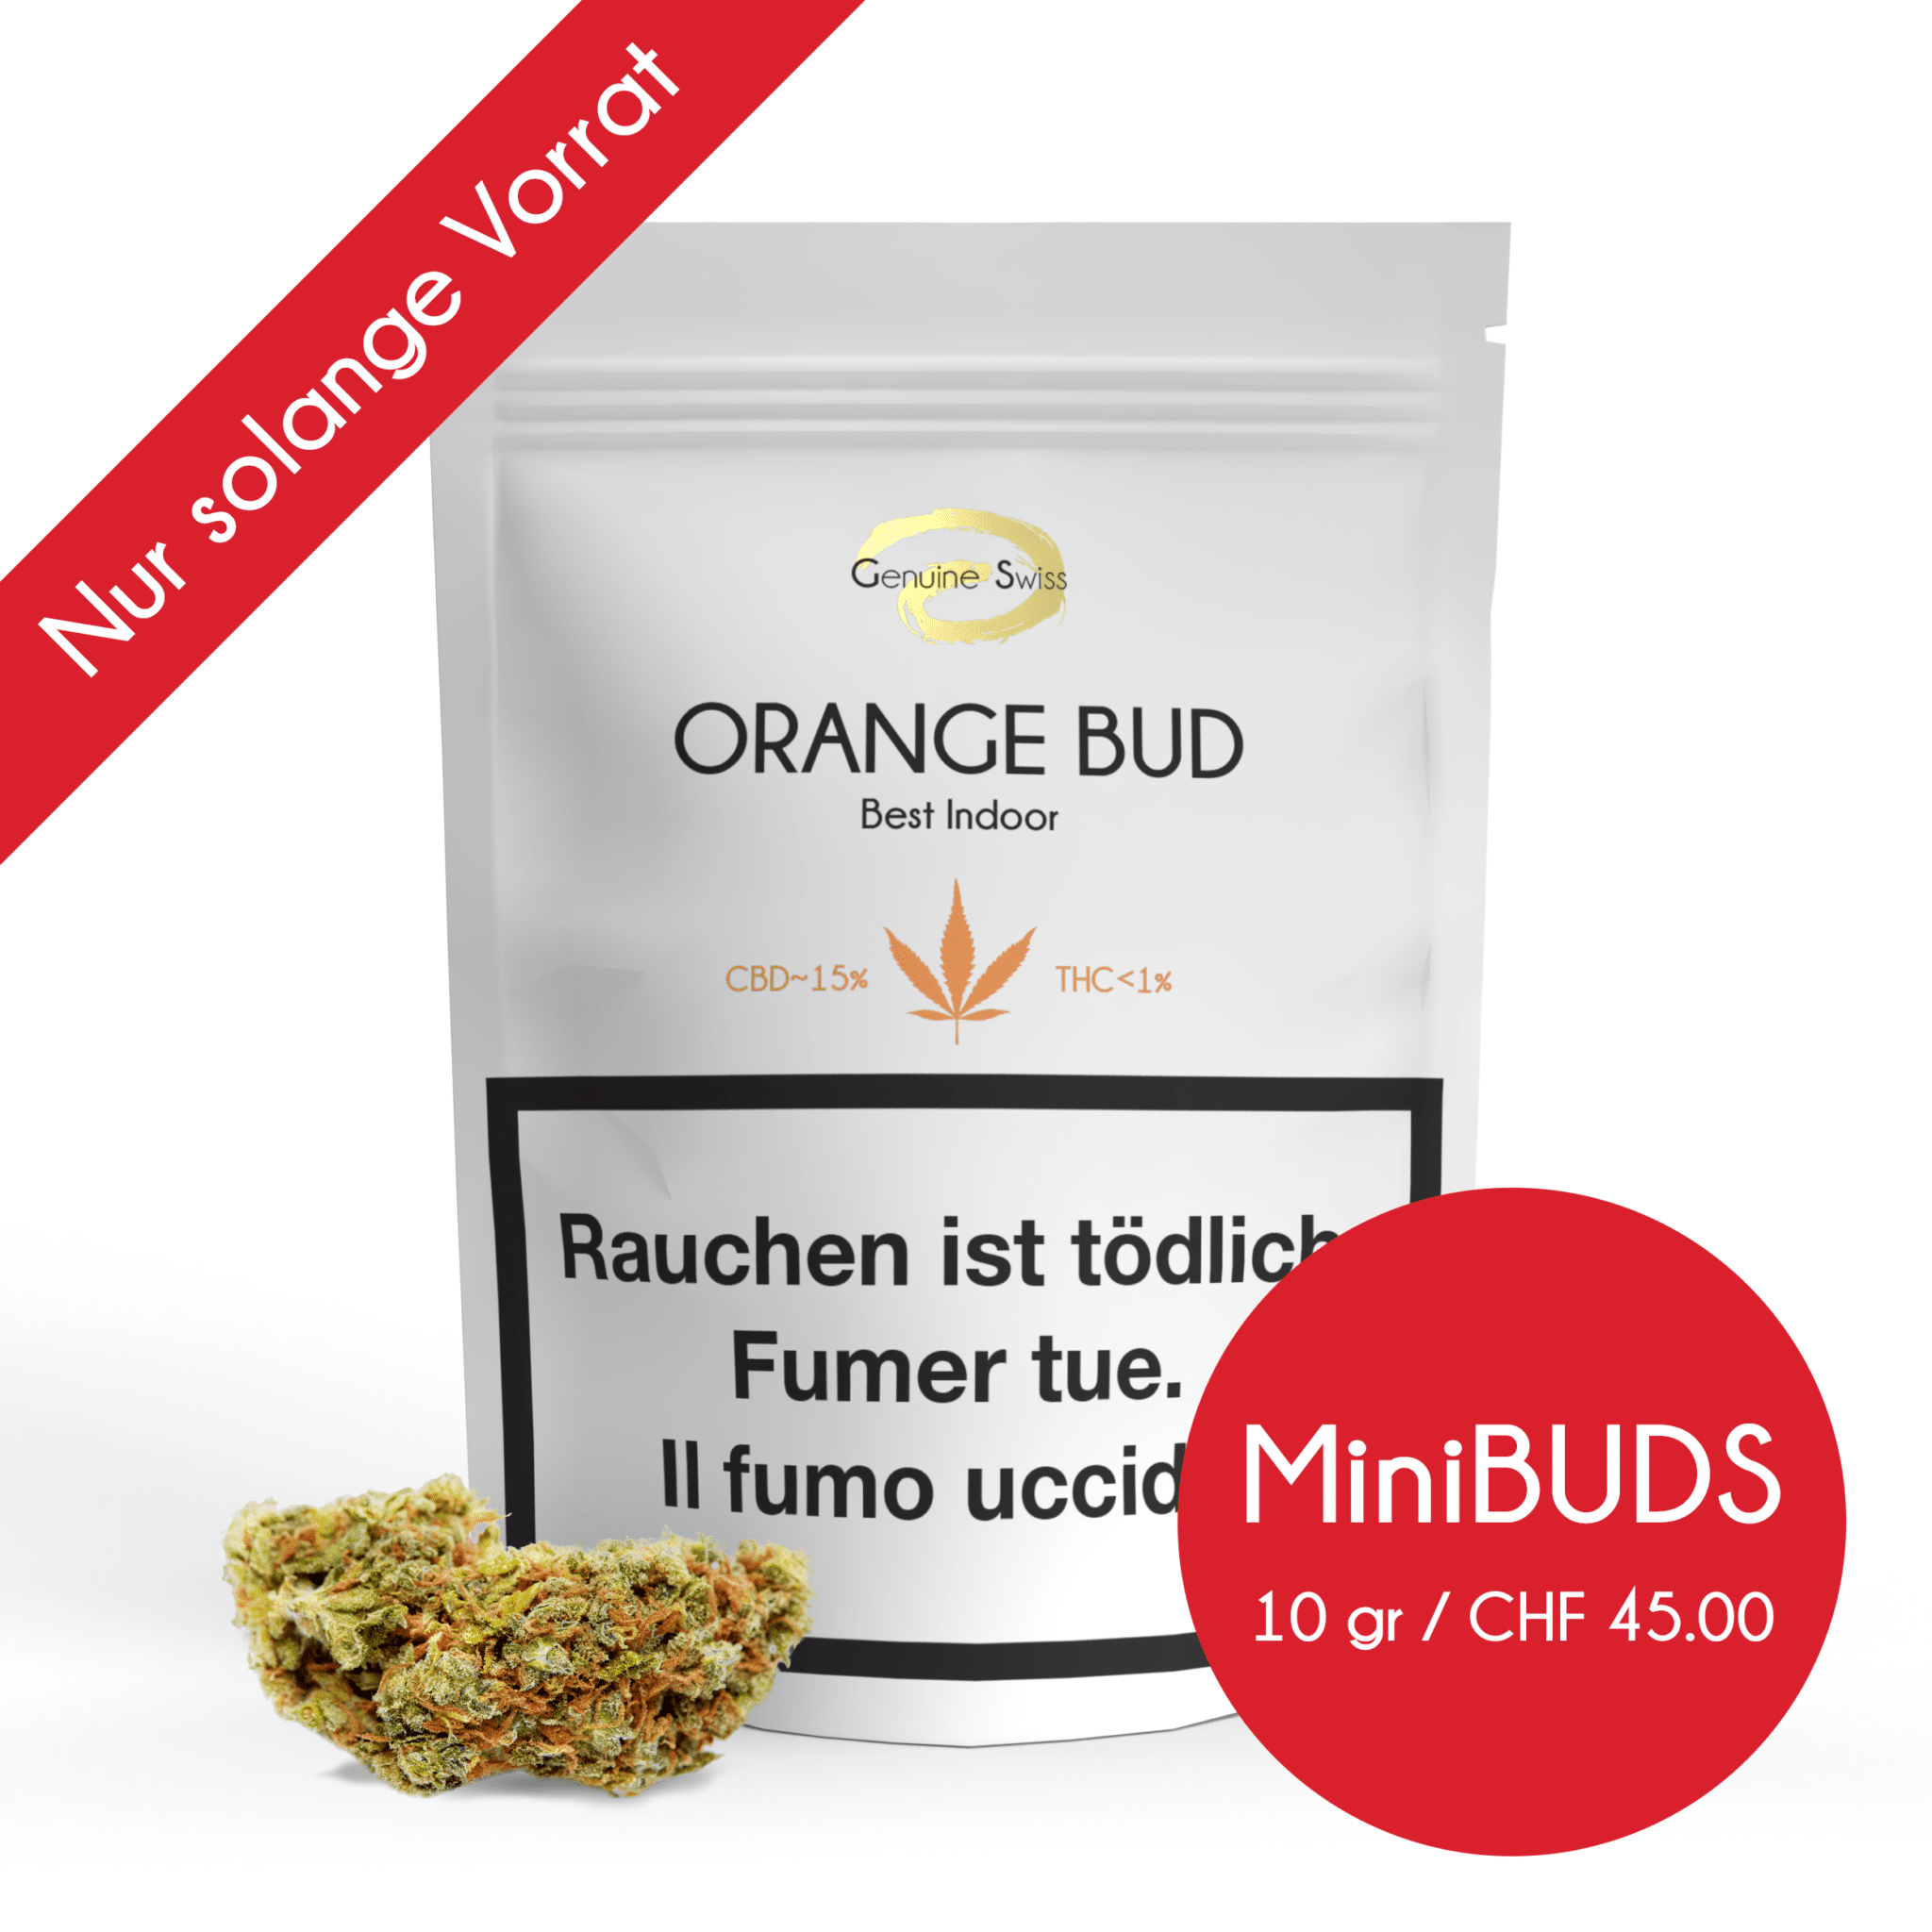 Genuine Swiss Orange Bud Minibuds, Legal Cannabis